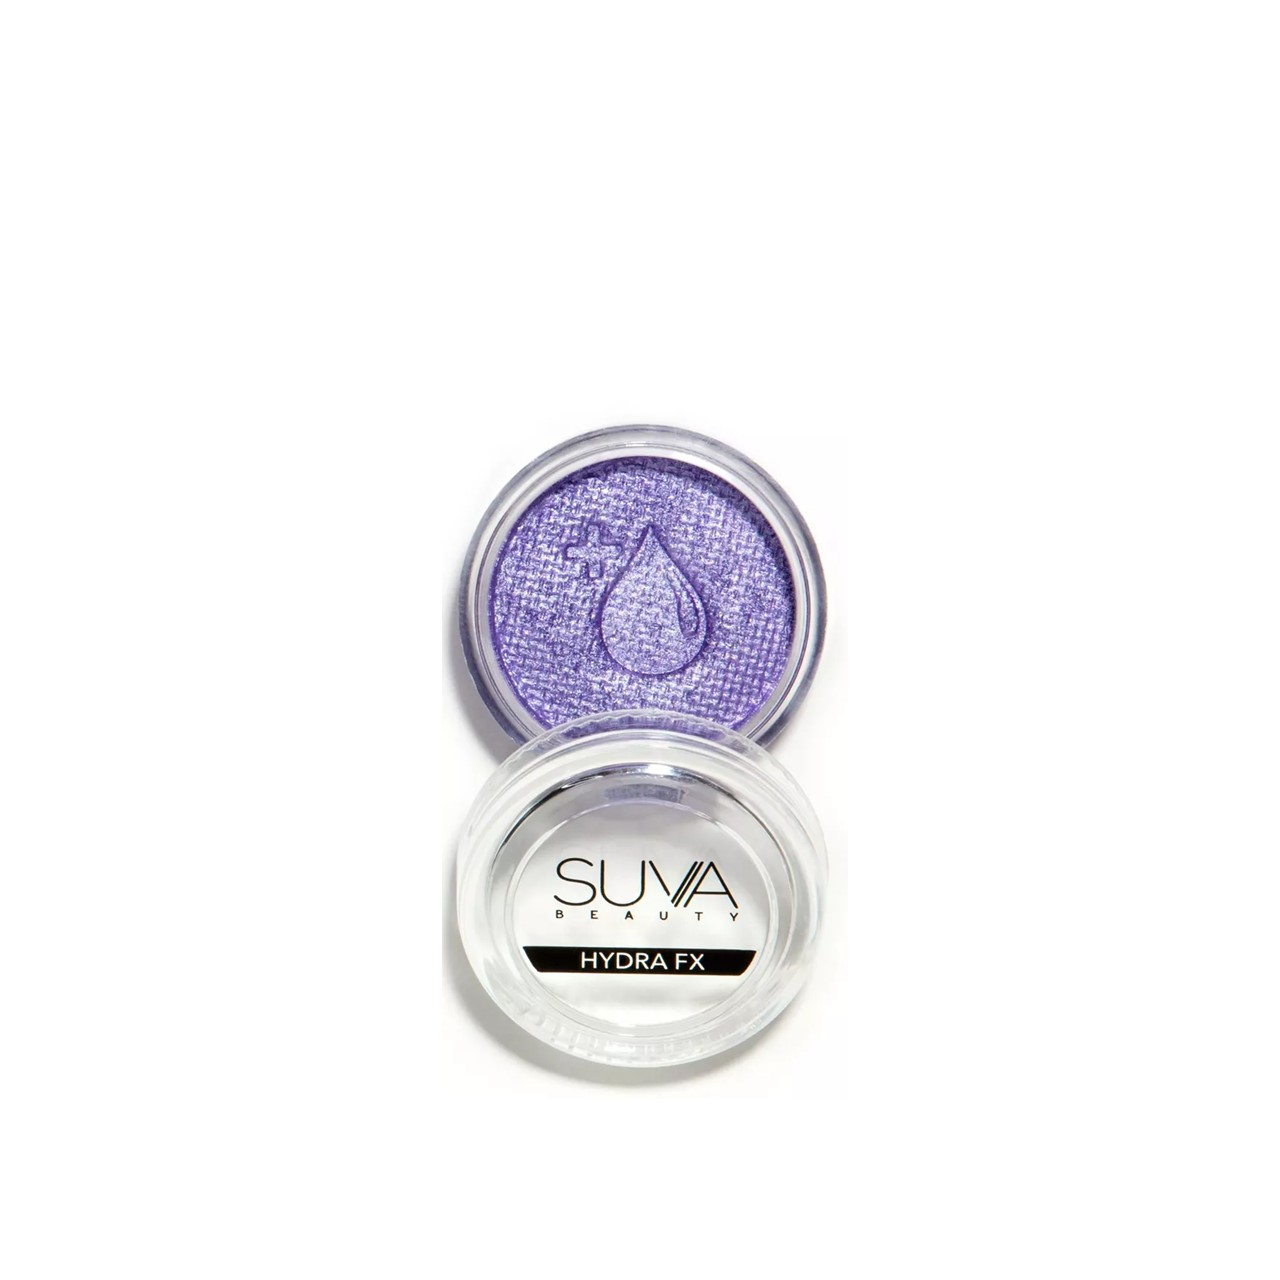 SUVA Beauty Hydra FX Lustre Lilac Chrome Body Art 10g